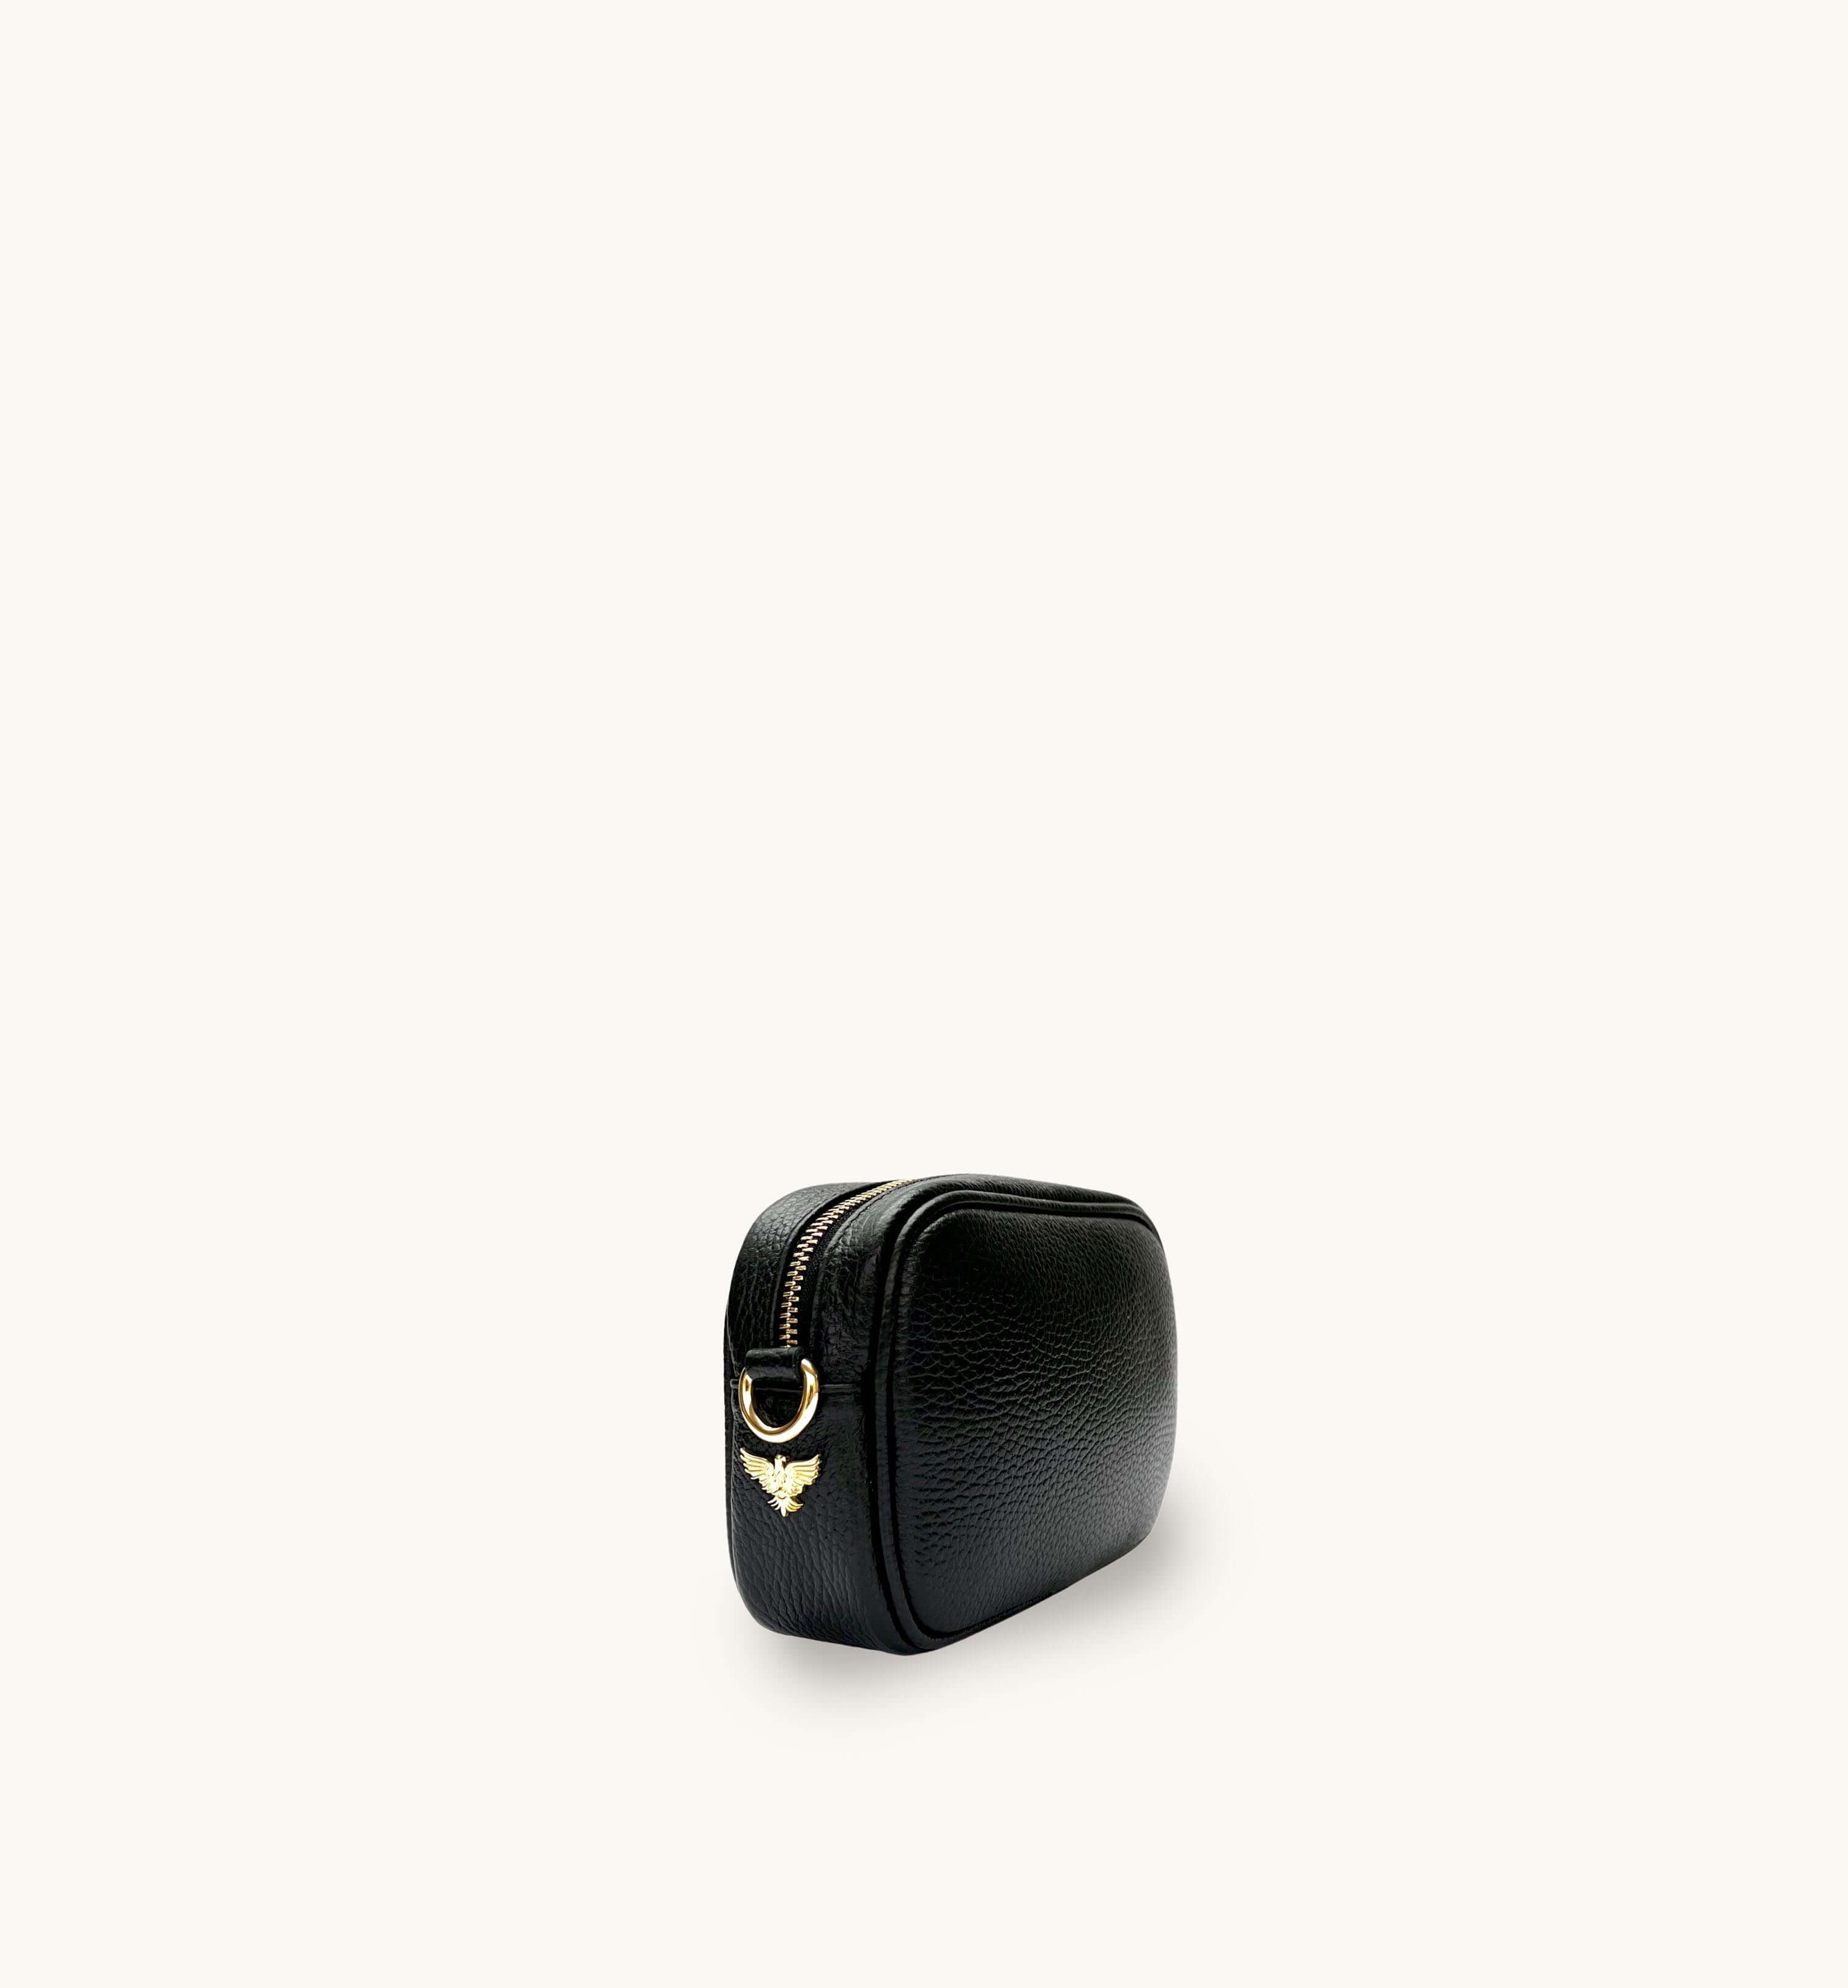 The Mini Tassel Black Leather Phone Bag With Black & Stone Arrow Strap